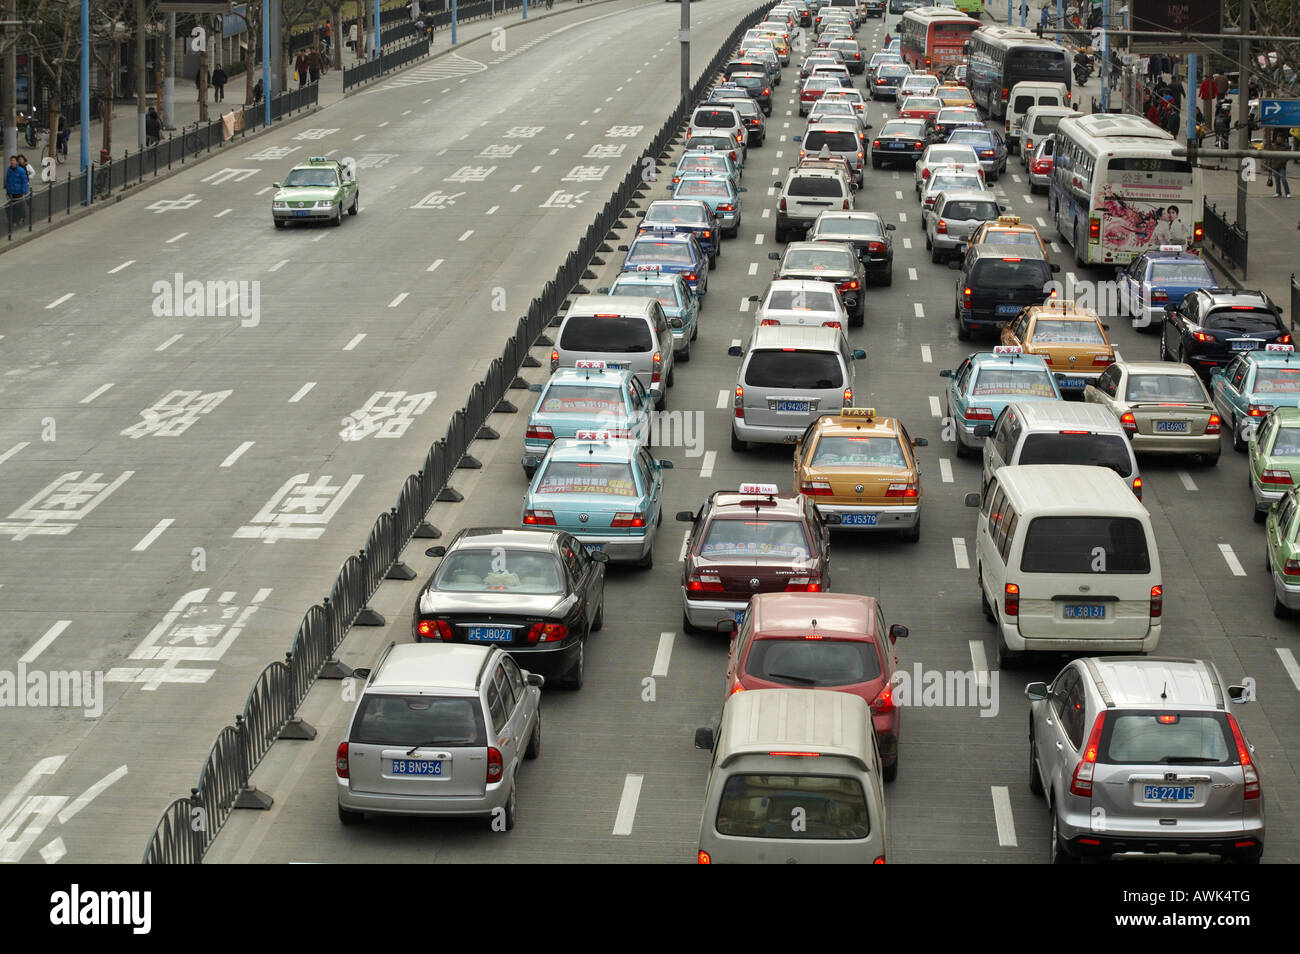 road street traffic jam gridlock congestion in Bangkok thailand asia Stock Photo